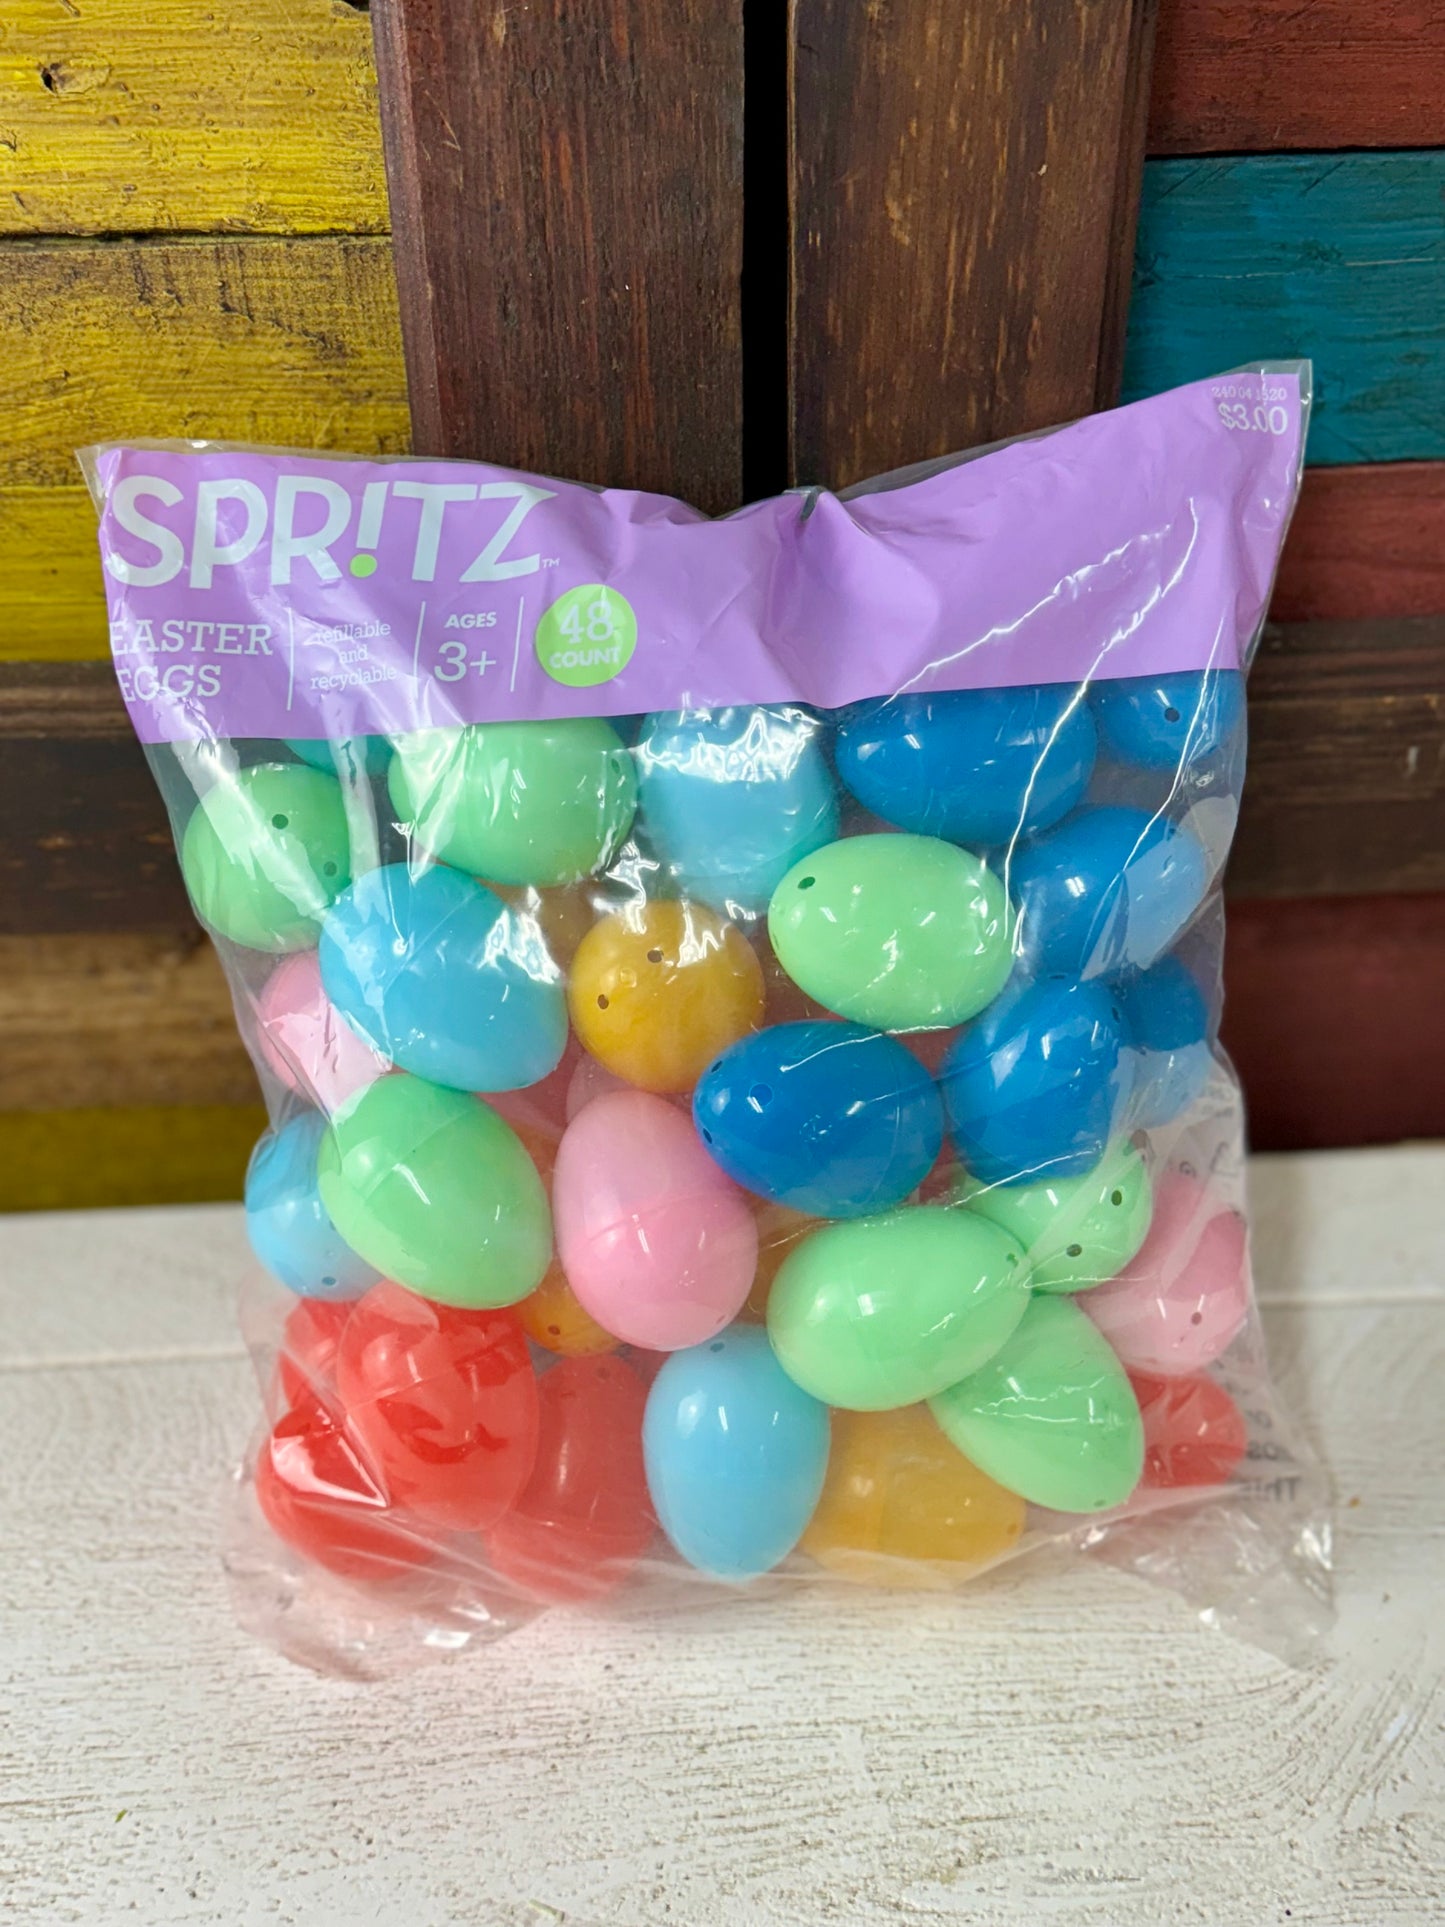 Spritz 48 Multicolor Plastic Easter Eggs